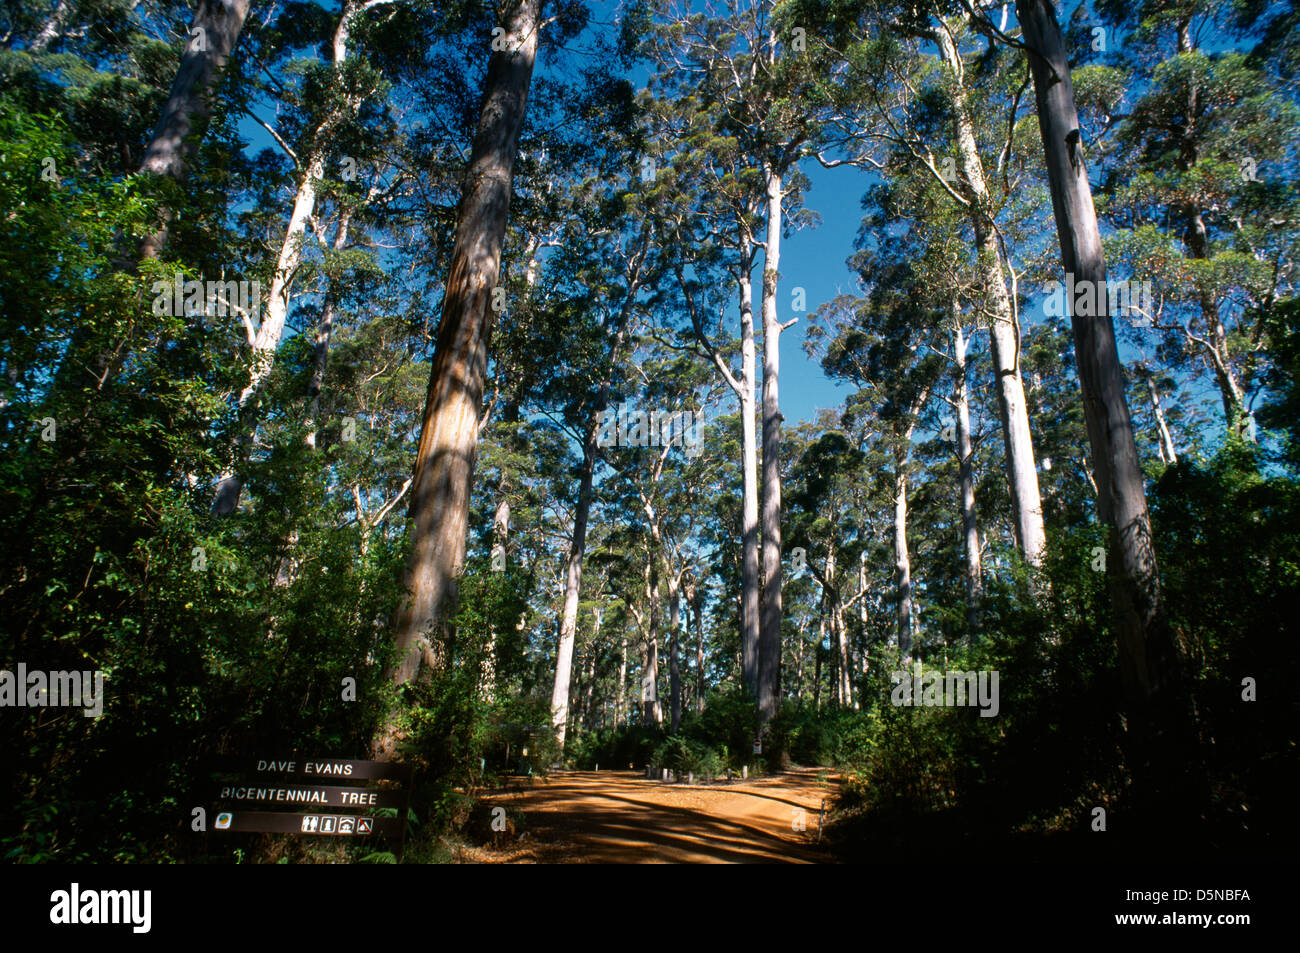 Pemberton W Australia Karri Eucalyptus Gloucester Tree Warren National Park Dave Evans Bicentennial Tree Stock Photo